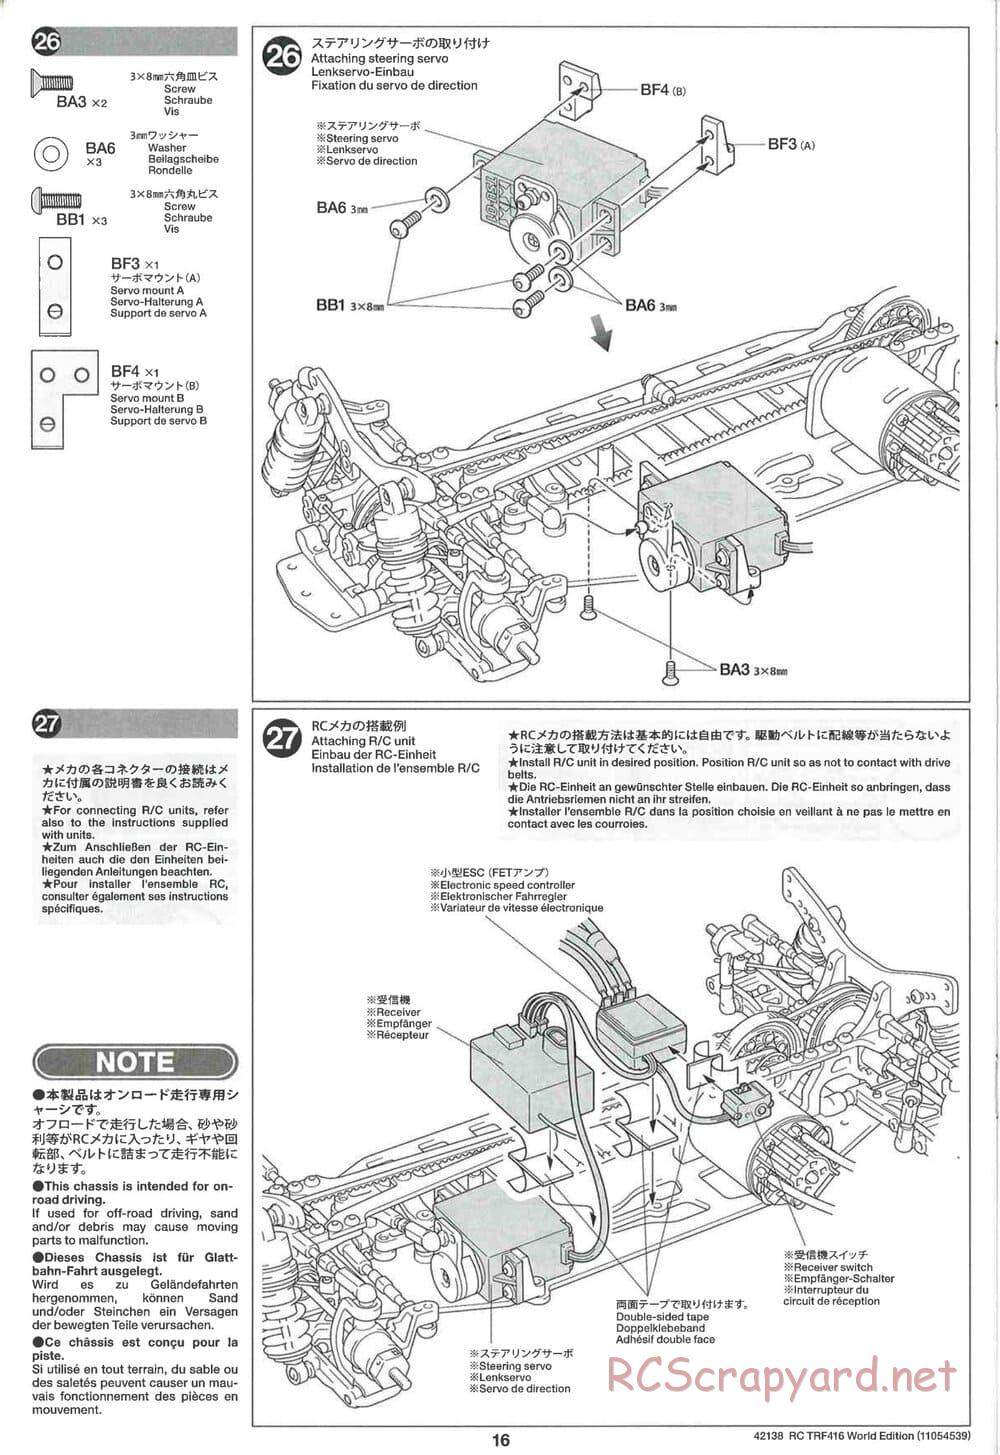 Tamiya - TRF416 World Edition Chassis - Manual - Page 16